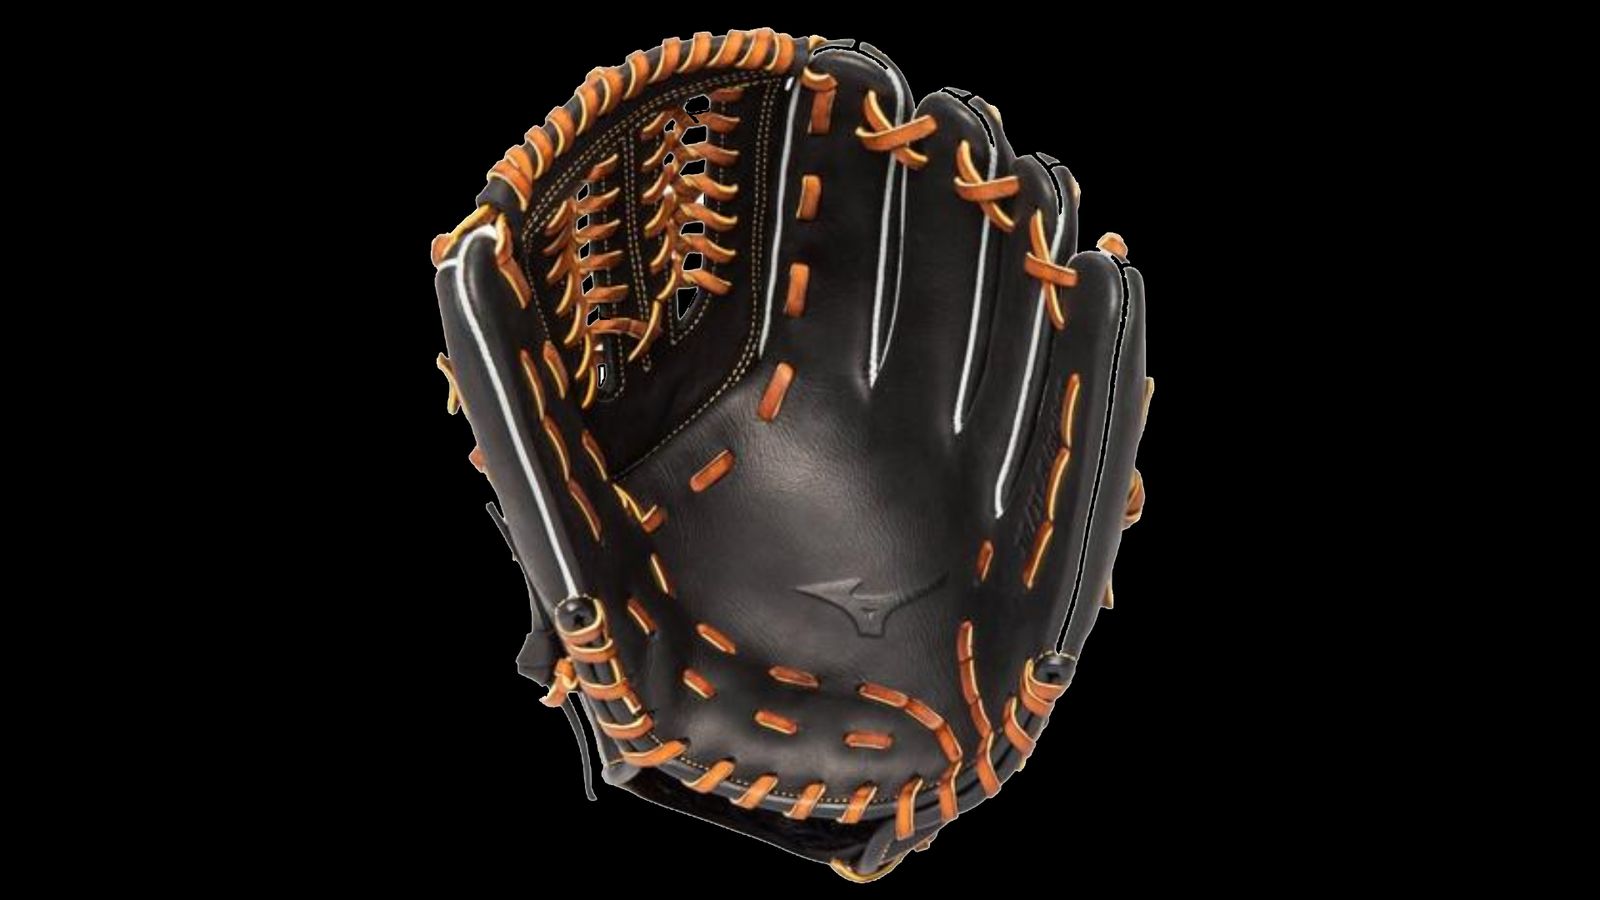 Mizuno Select 9 product image of a black and brown tartan glove.